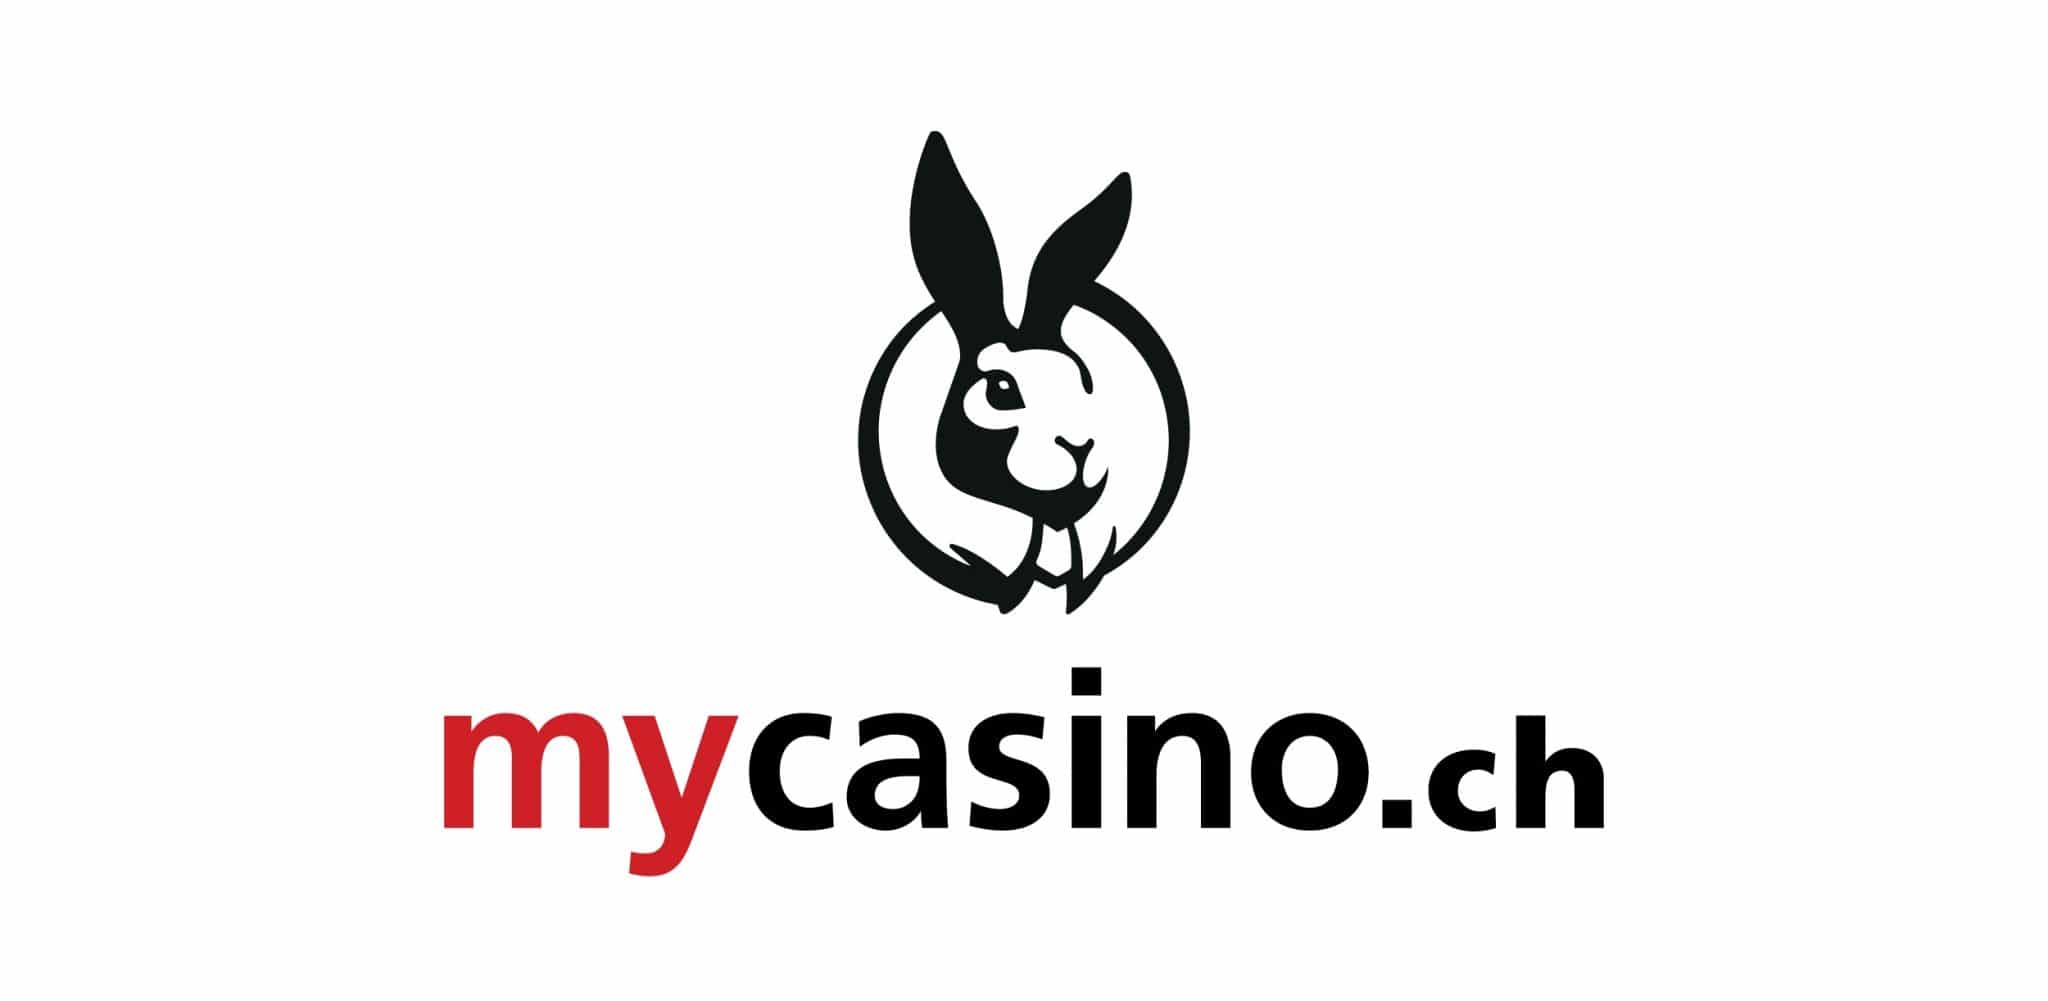 mycasino.ch: Casino app